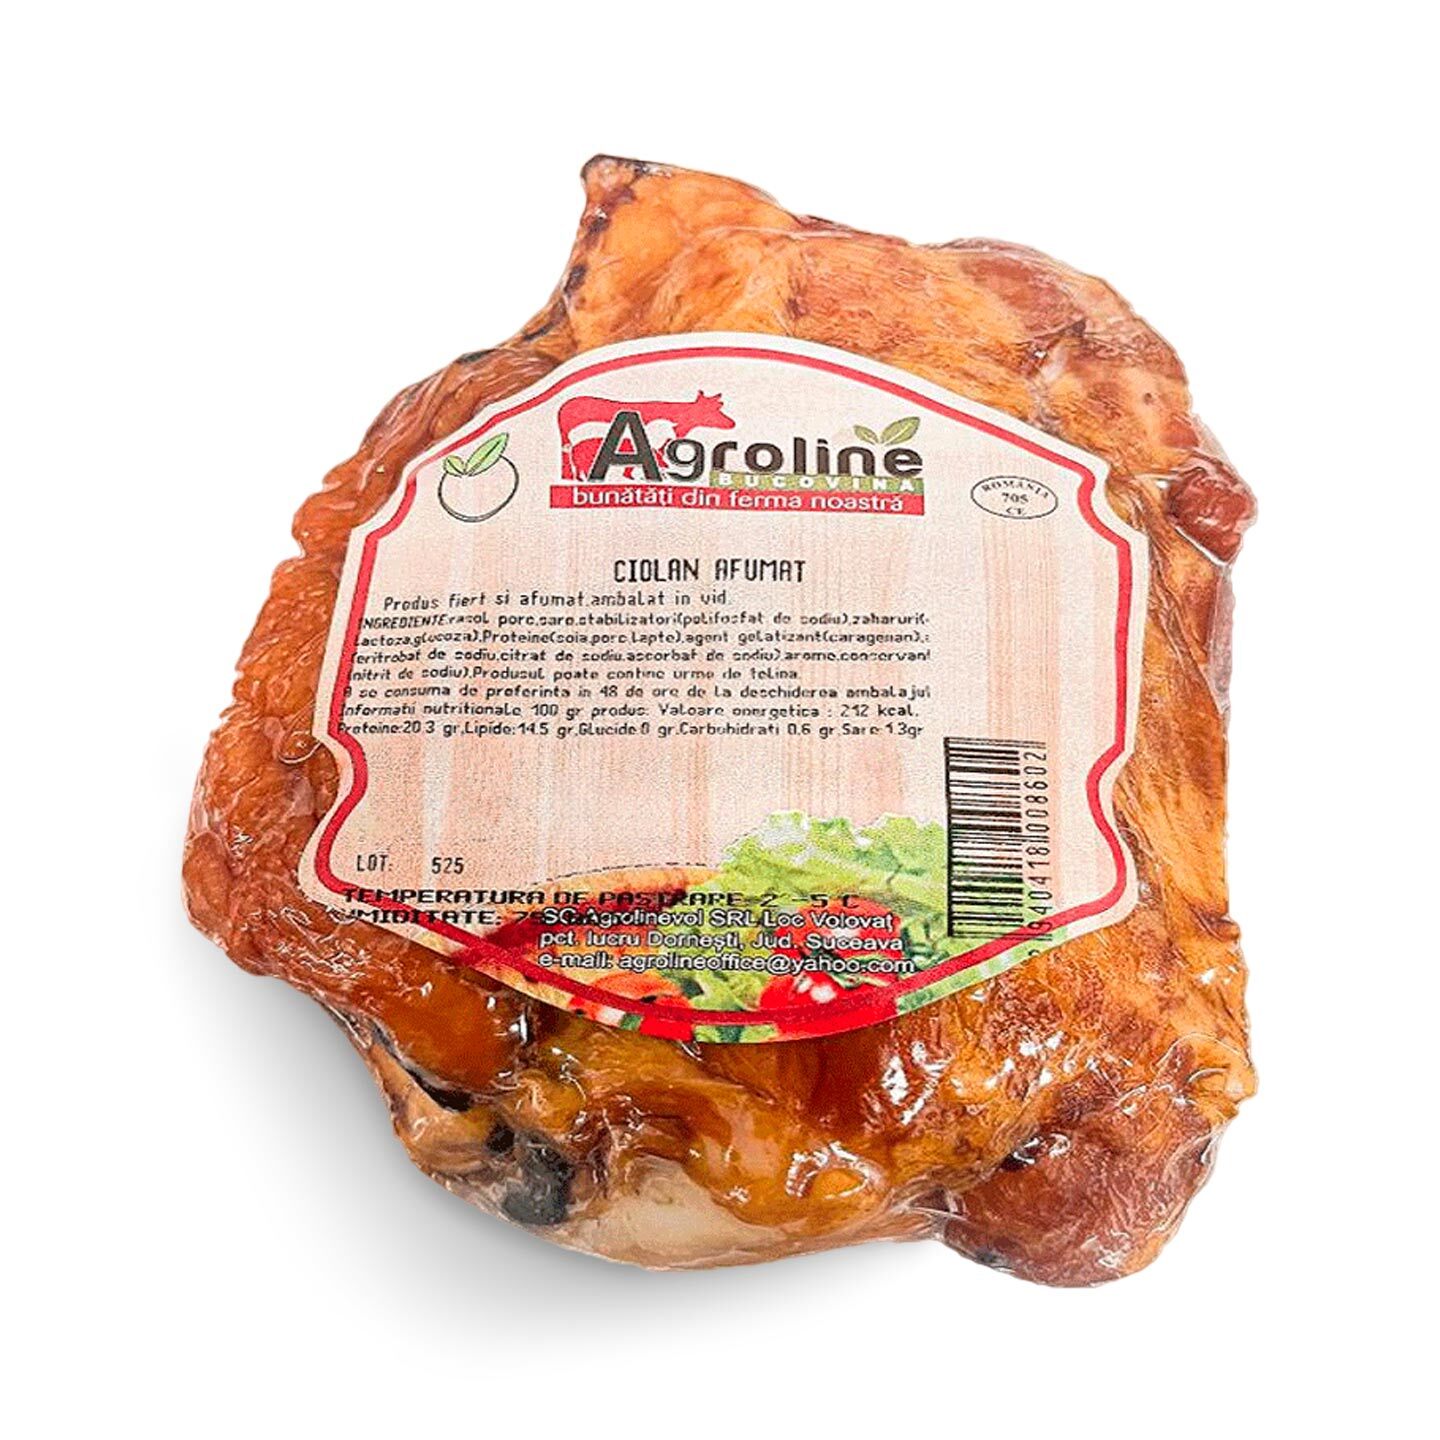 Ciolan afumat de porc Agroline per 100g